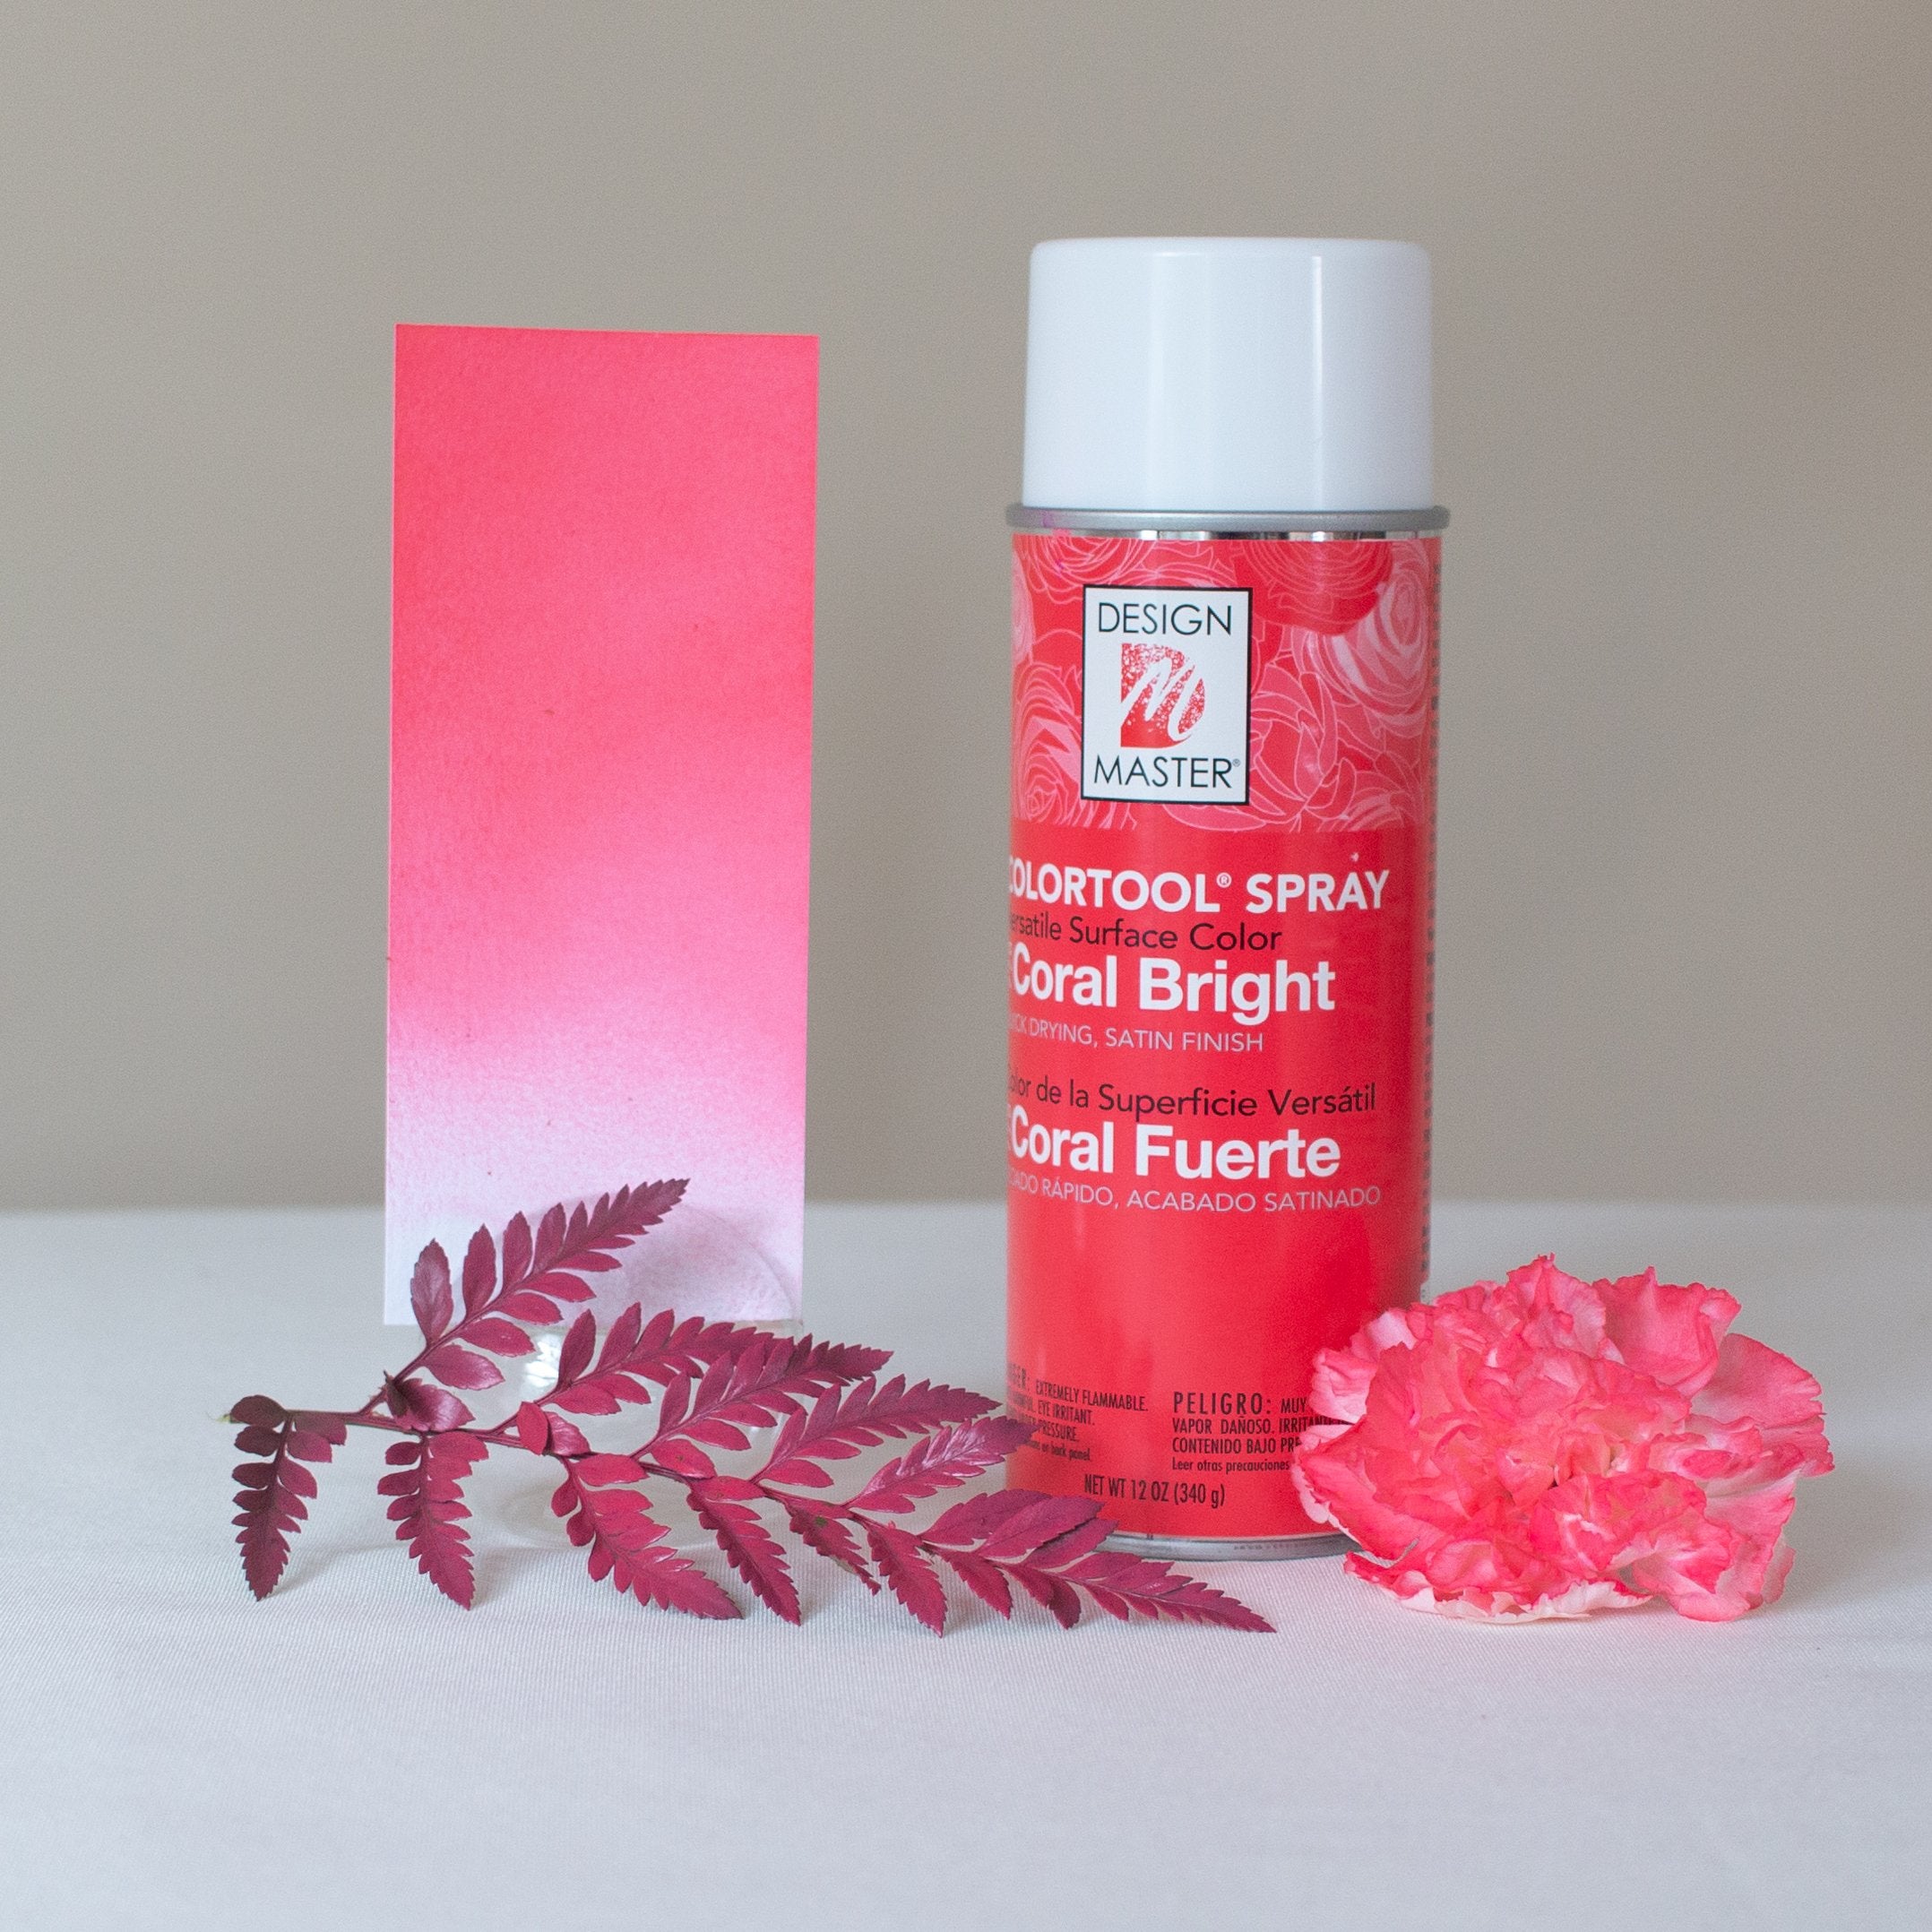 Coral Bright Design Master Colortool Floral Spray Paint